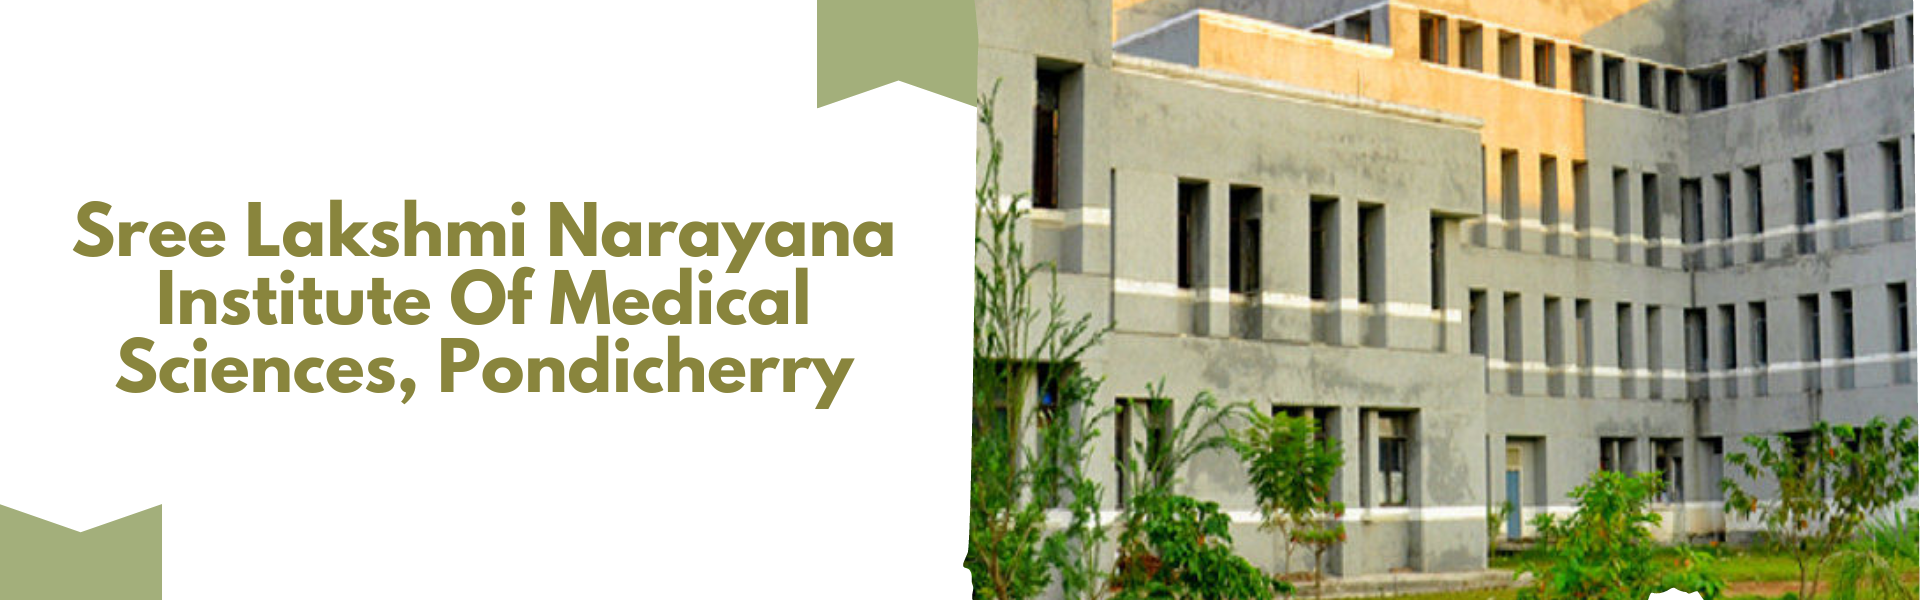 Sree Lakshmi Narayana Institute Of Medical Sciences, Pondicherry